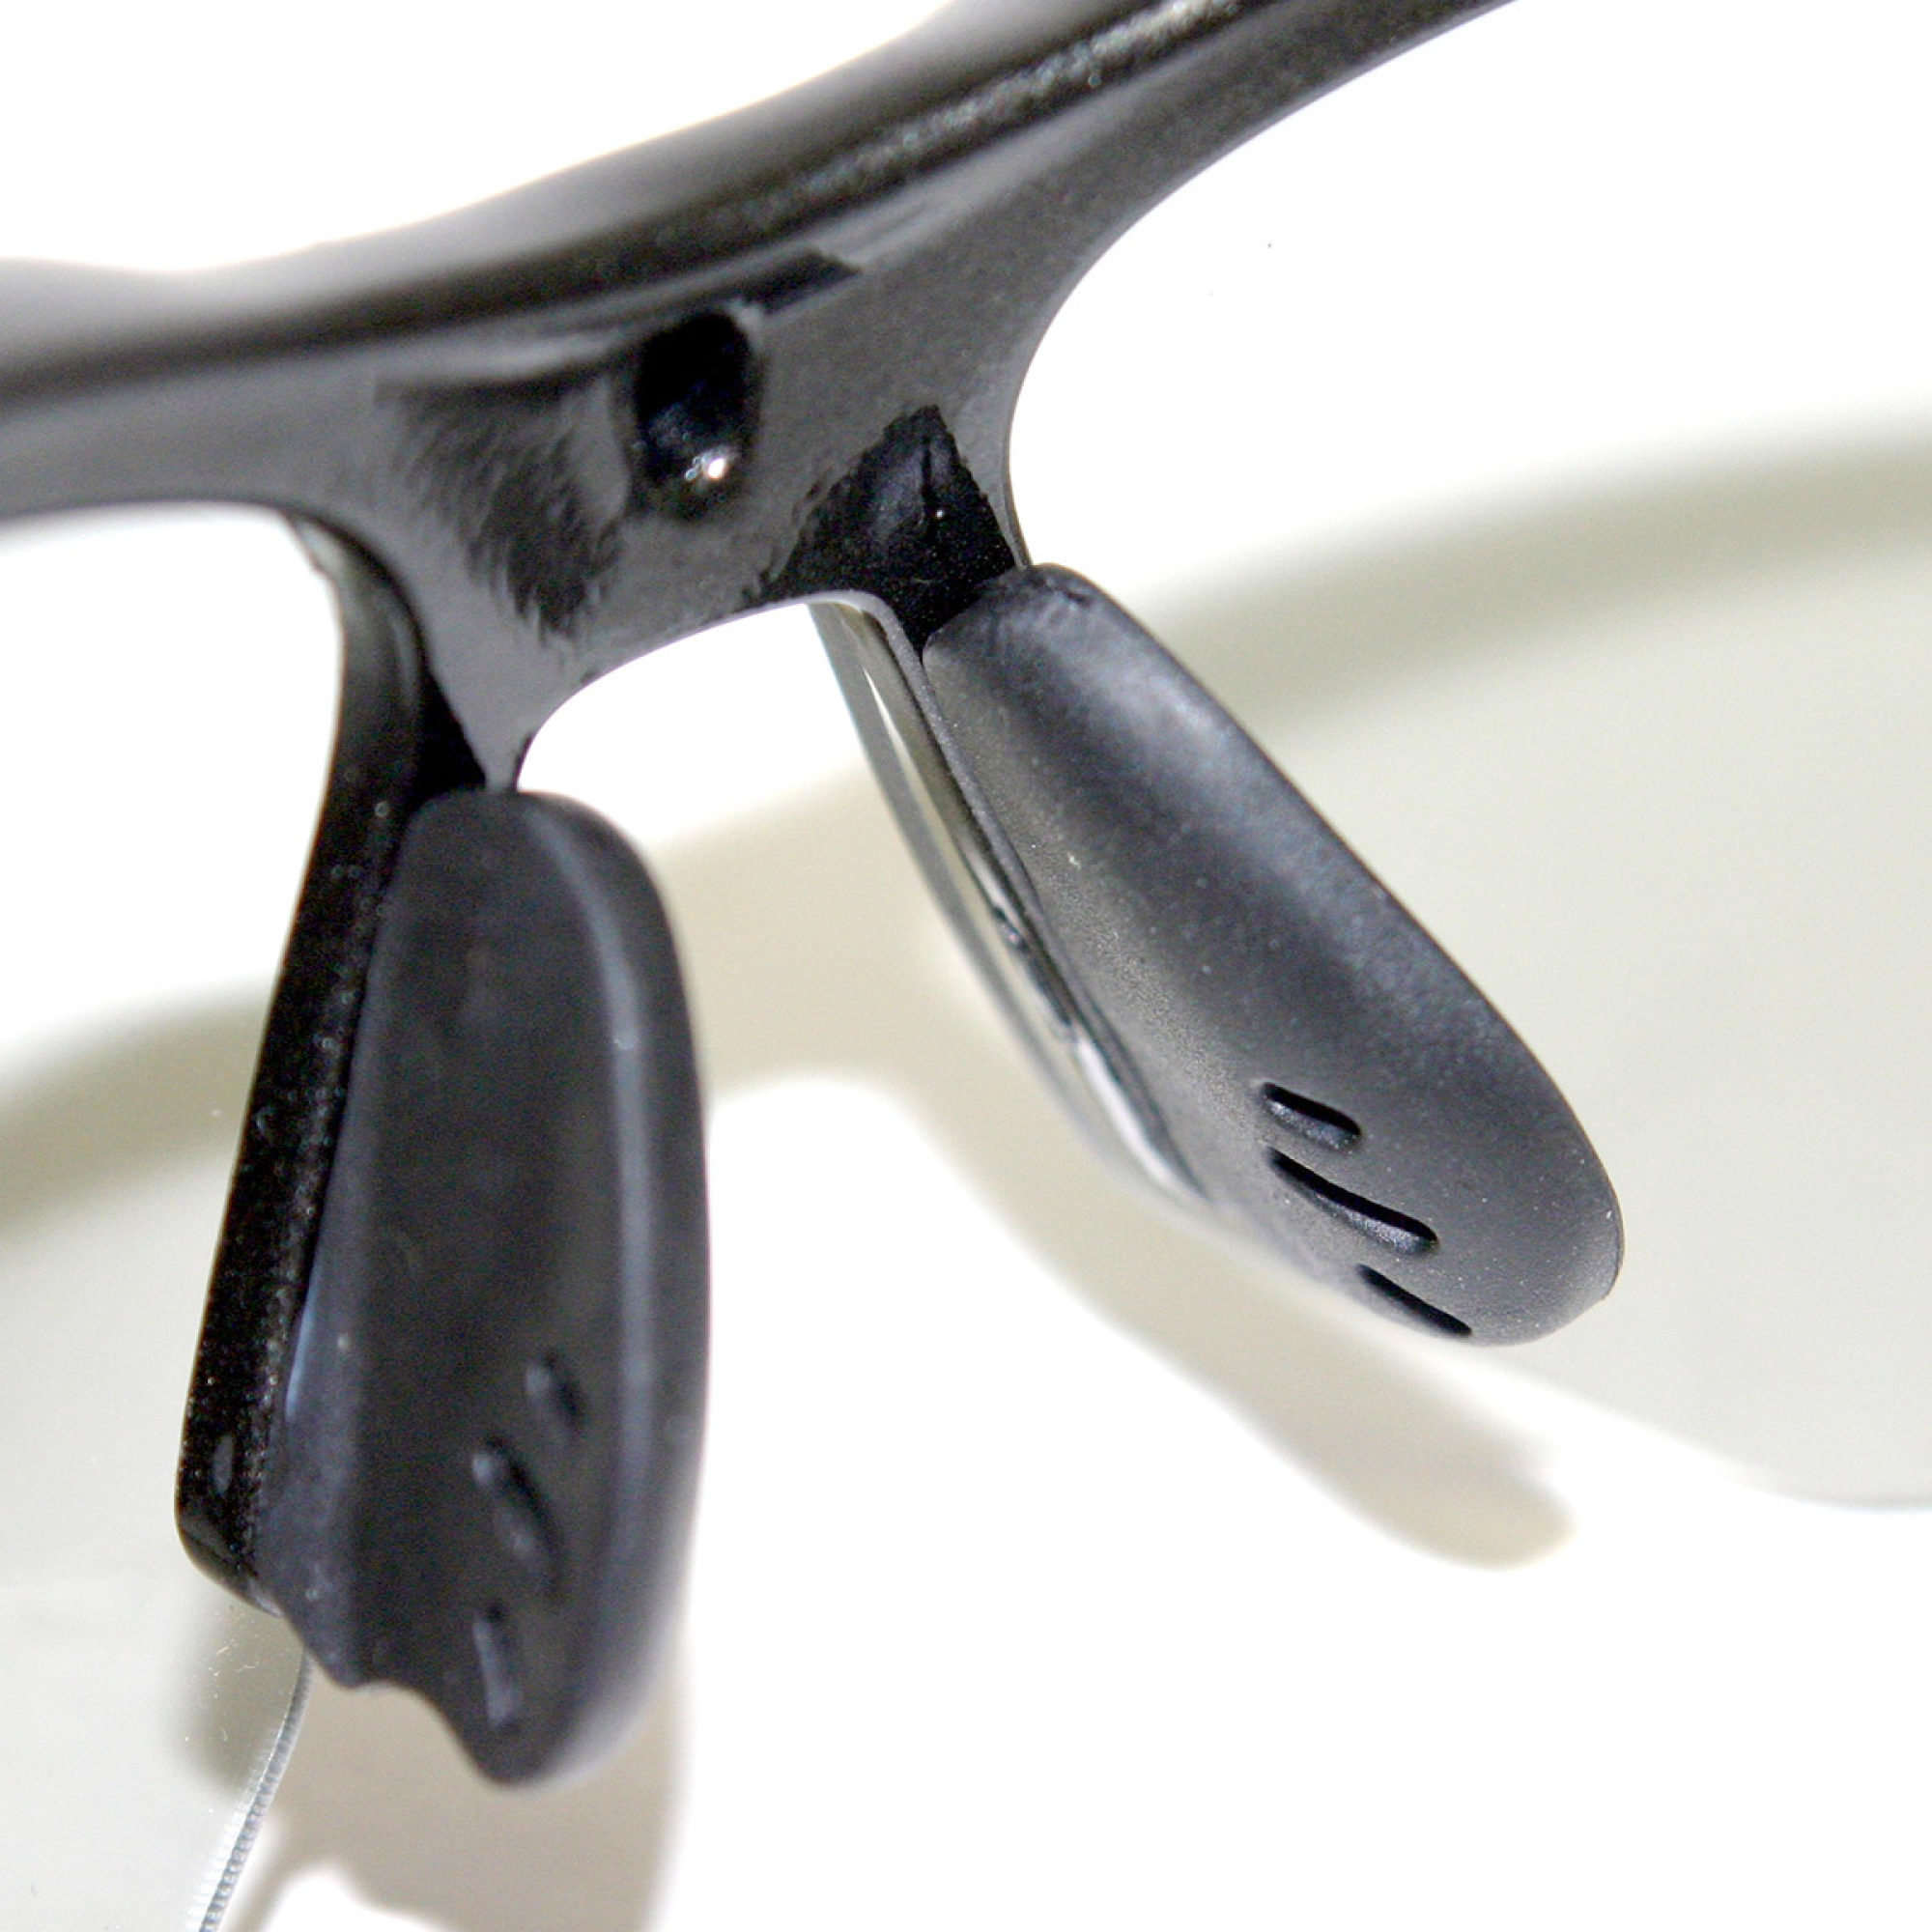 NAVIGATOR HORNET Sportbrille, Bikebrille, UV-Lens, 28g